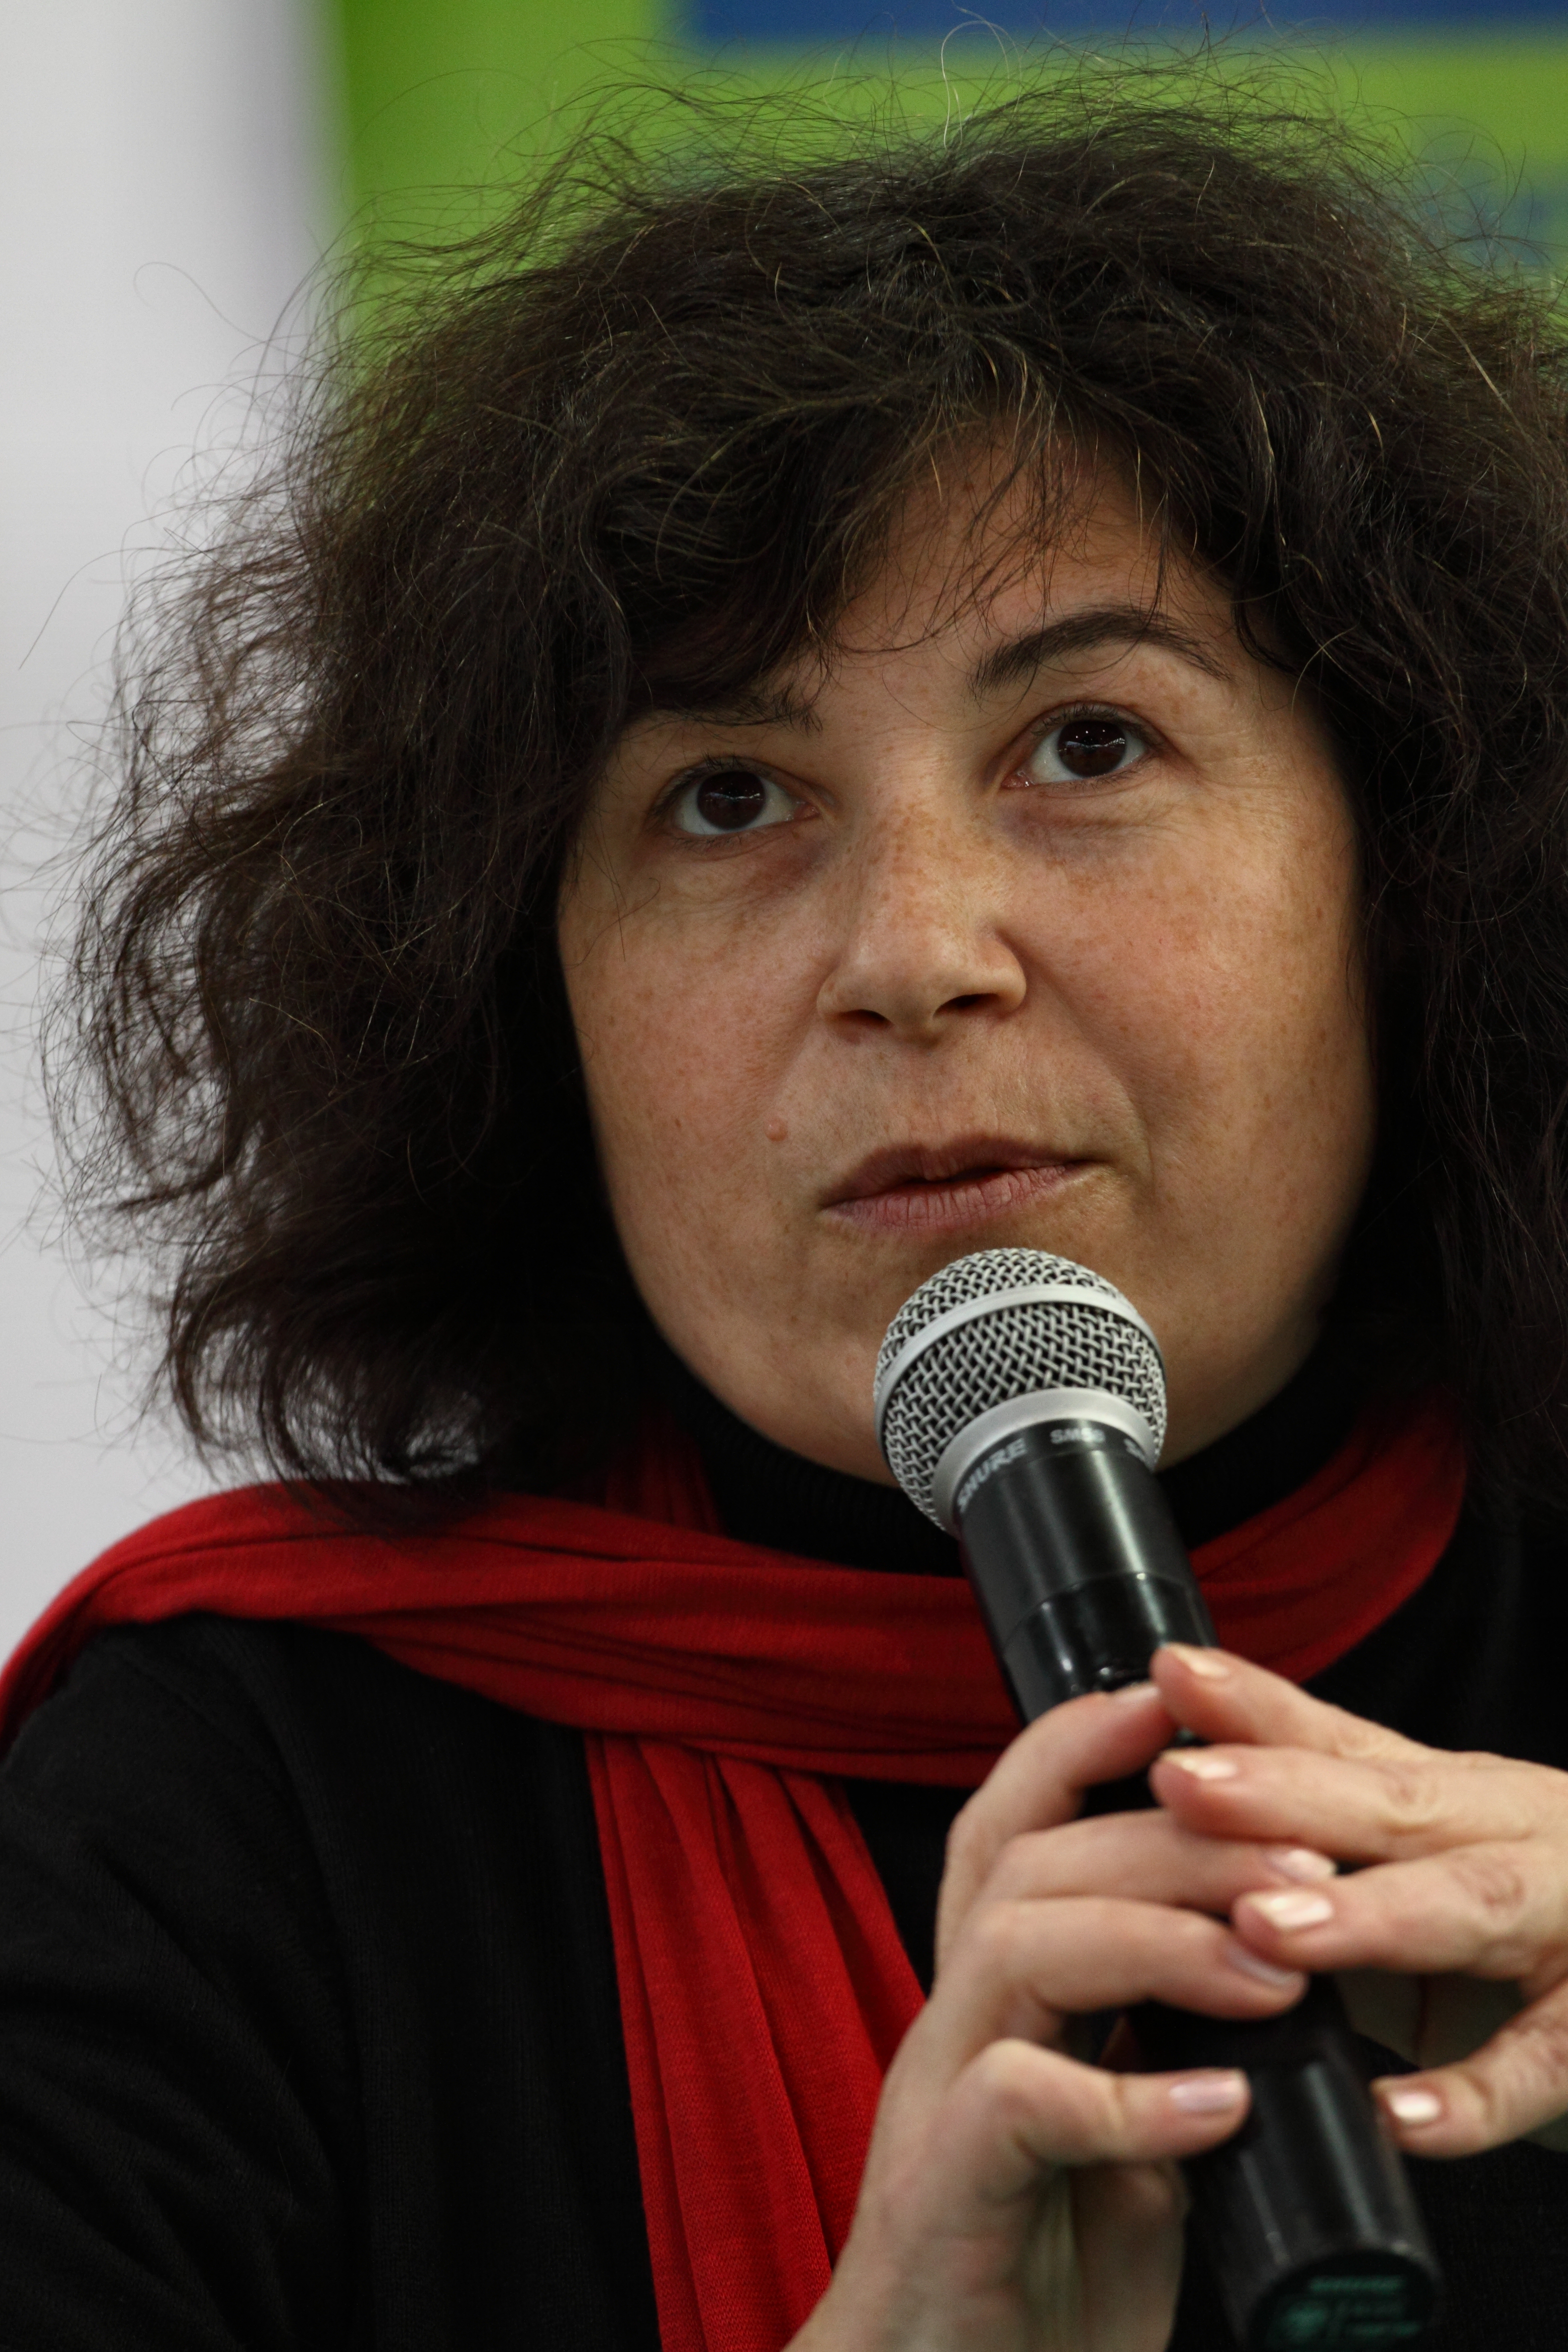 Irena Dousková at LIBRI 2009